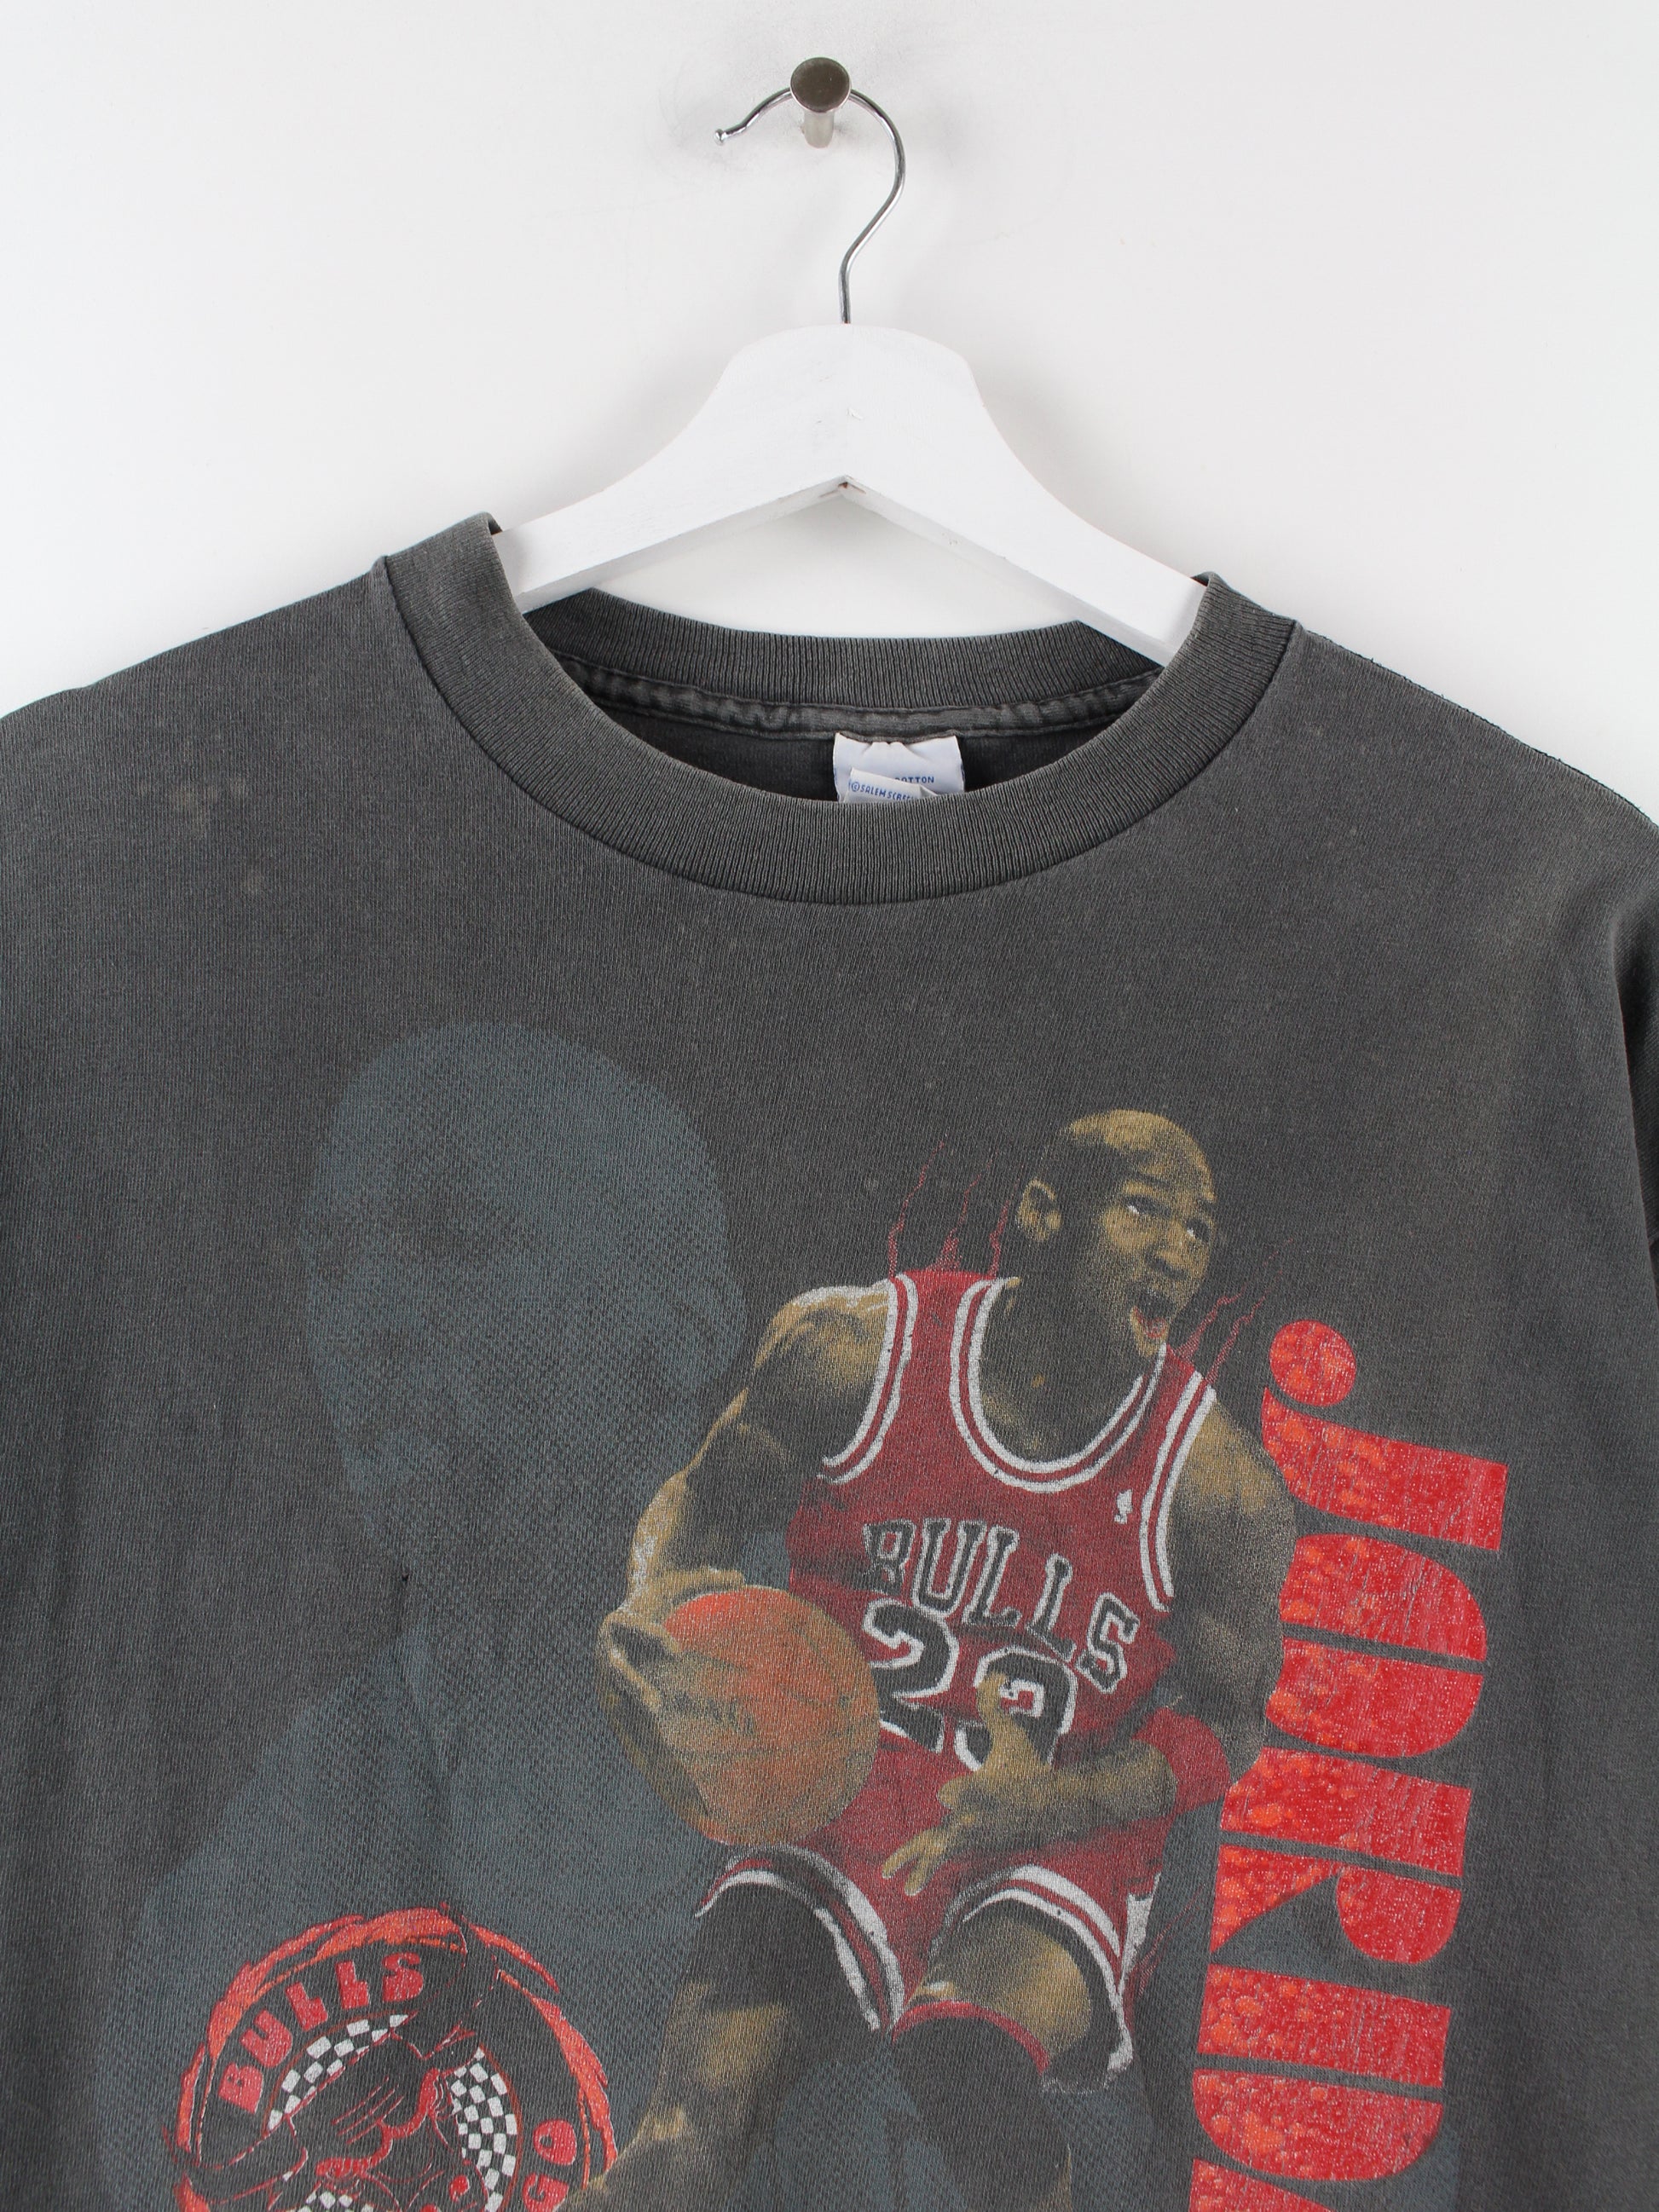 Vintage Detroit Pistons Salem Sportswear T-Shirt Size XL Gray 90s 1990 –  Throwback Vault